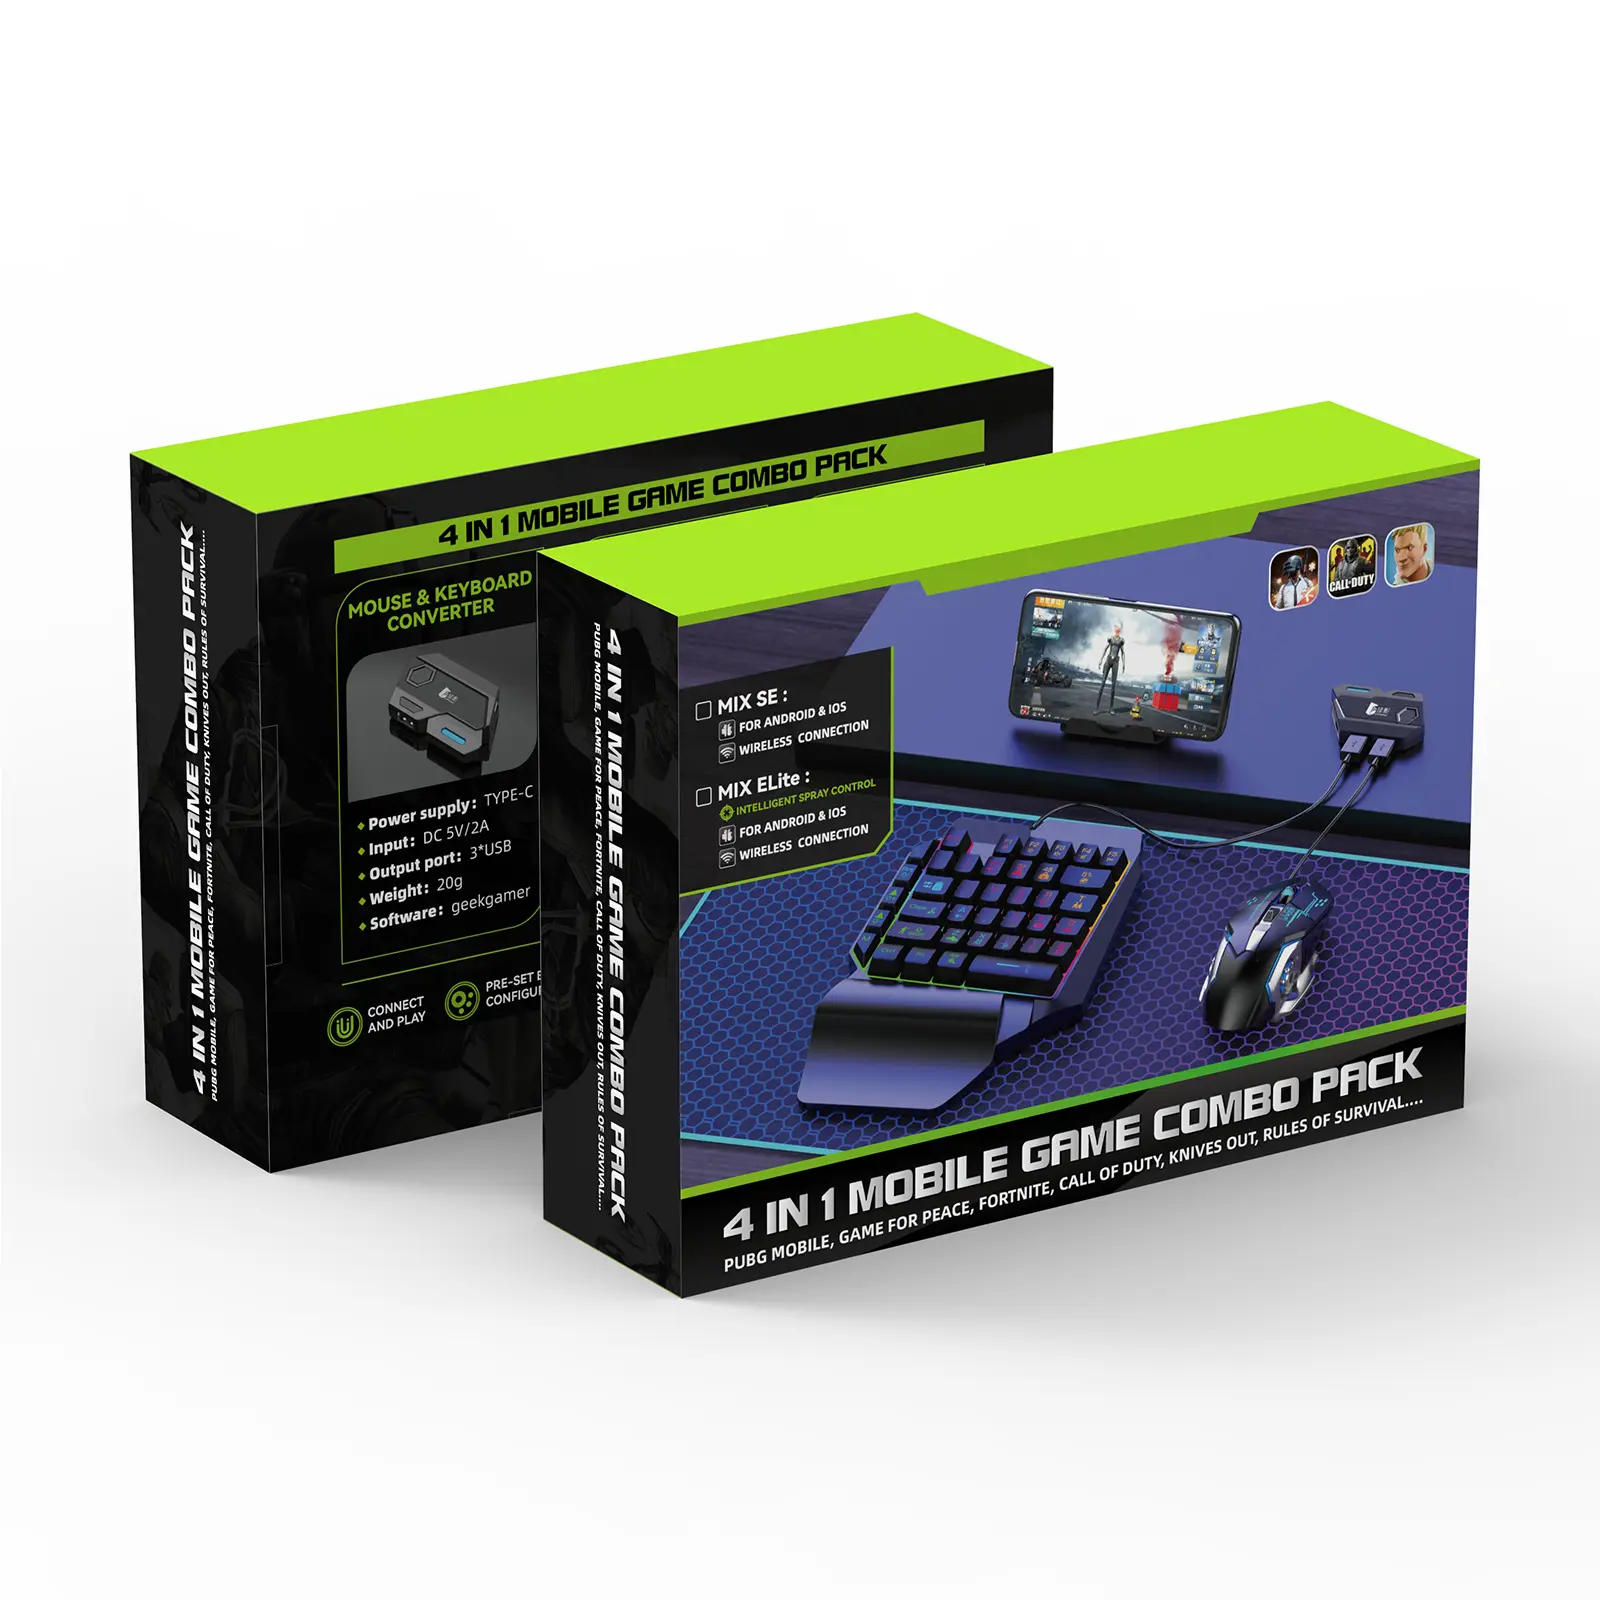 Keyboard dan Mouse Game Seluler Mini 4-In-1, Keyboard dan Mouse Game Seluler Kombo untuk Bermain Game